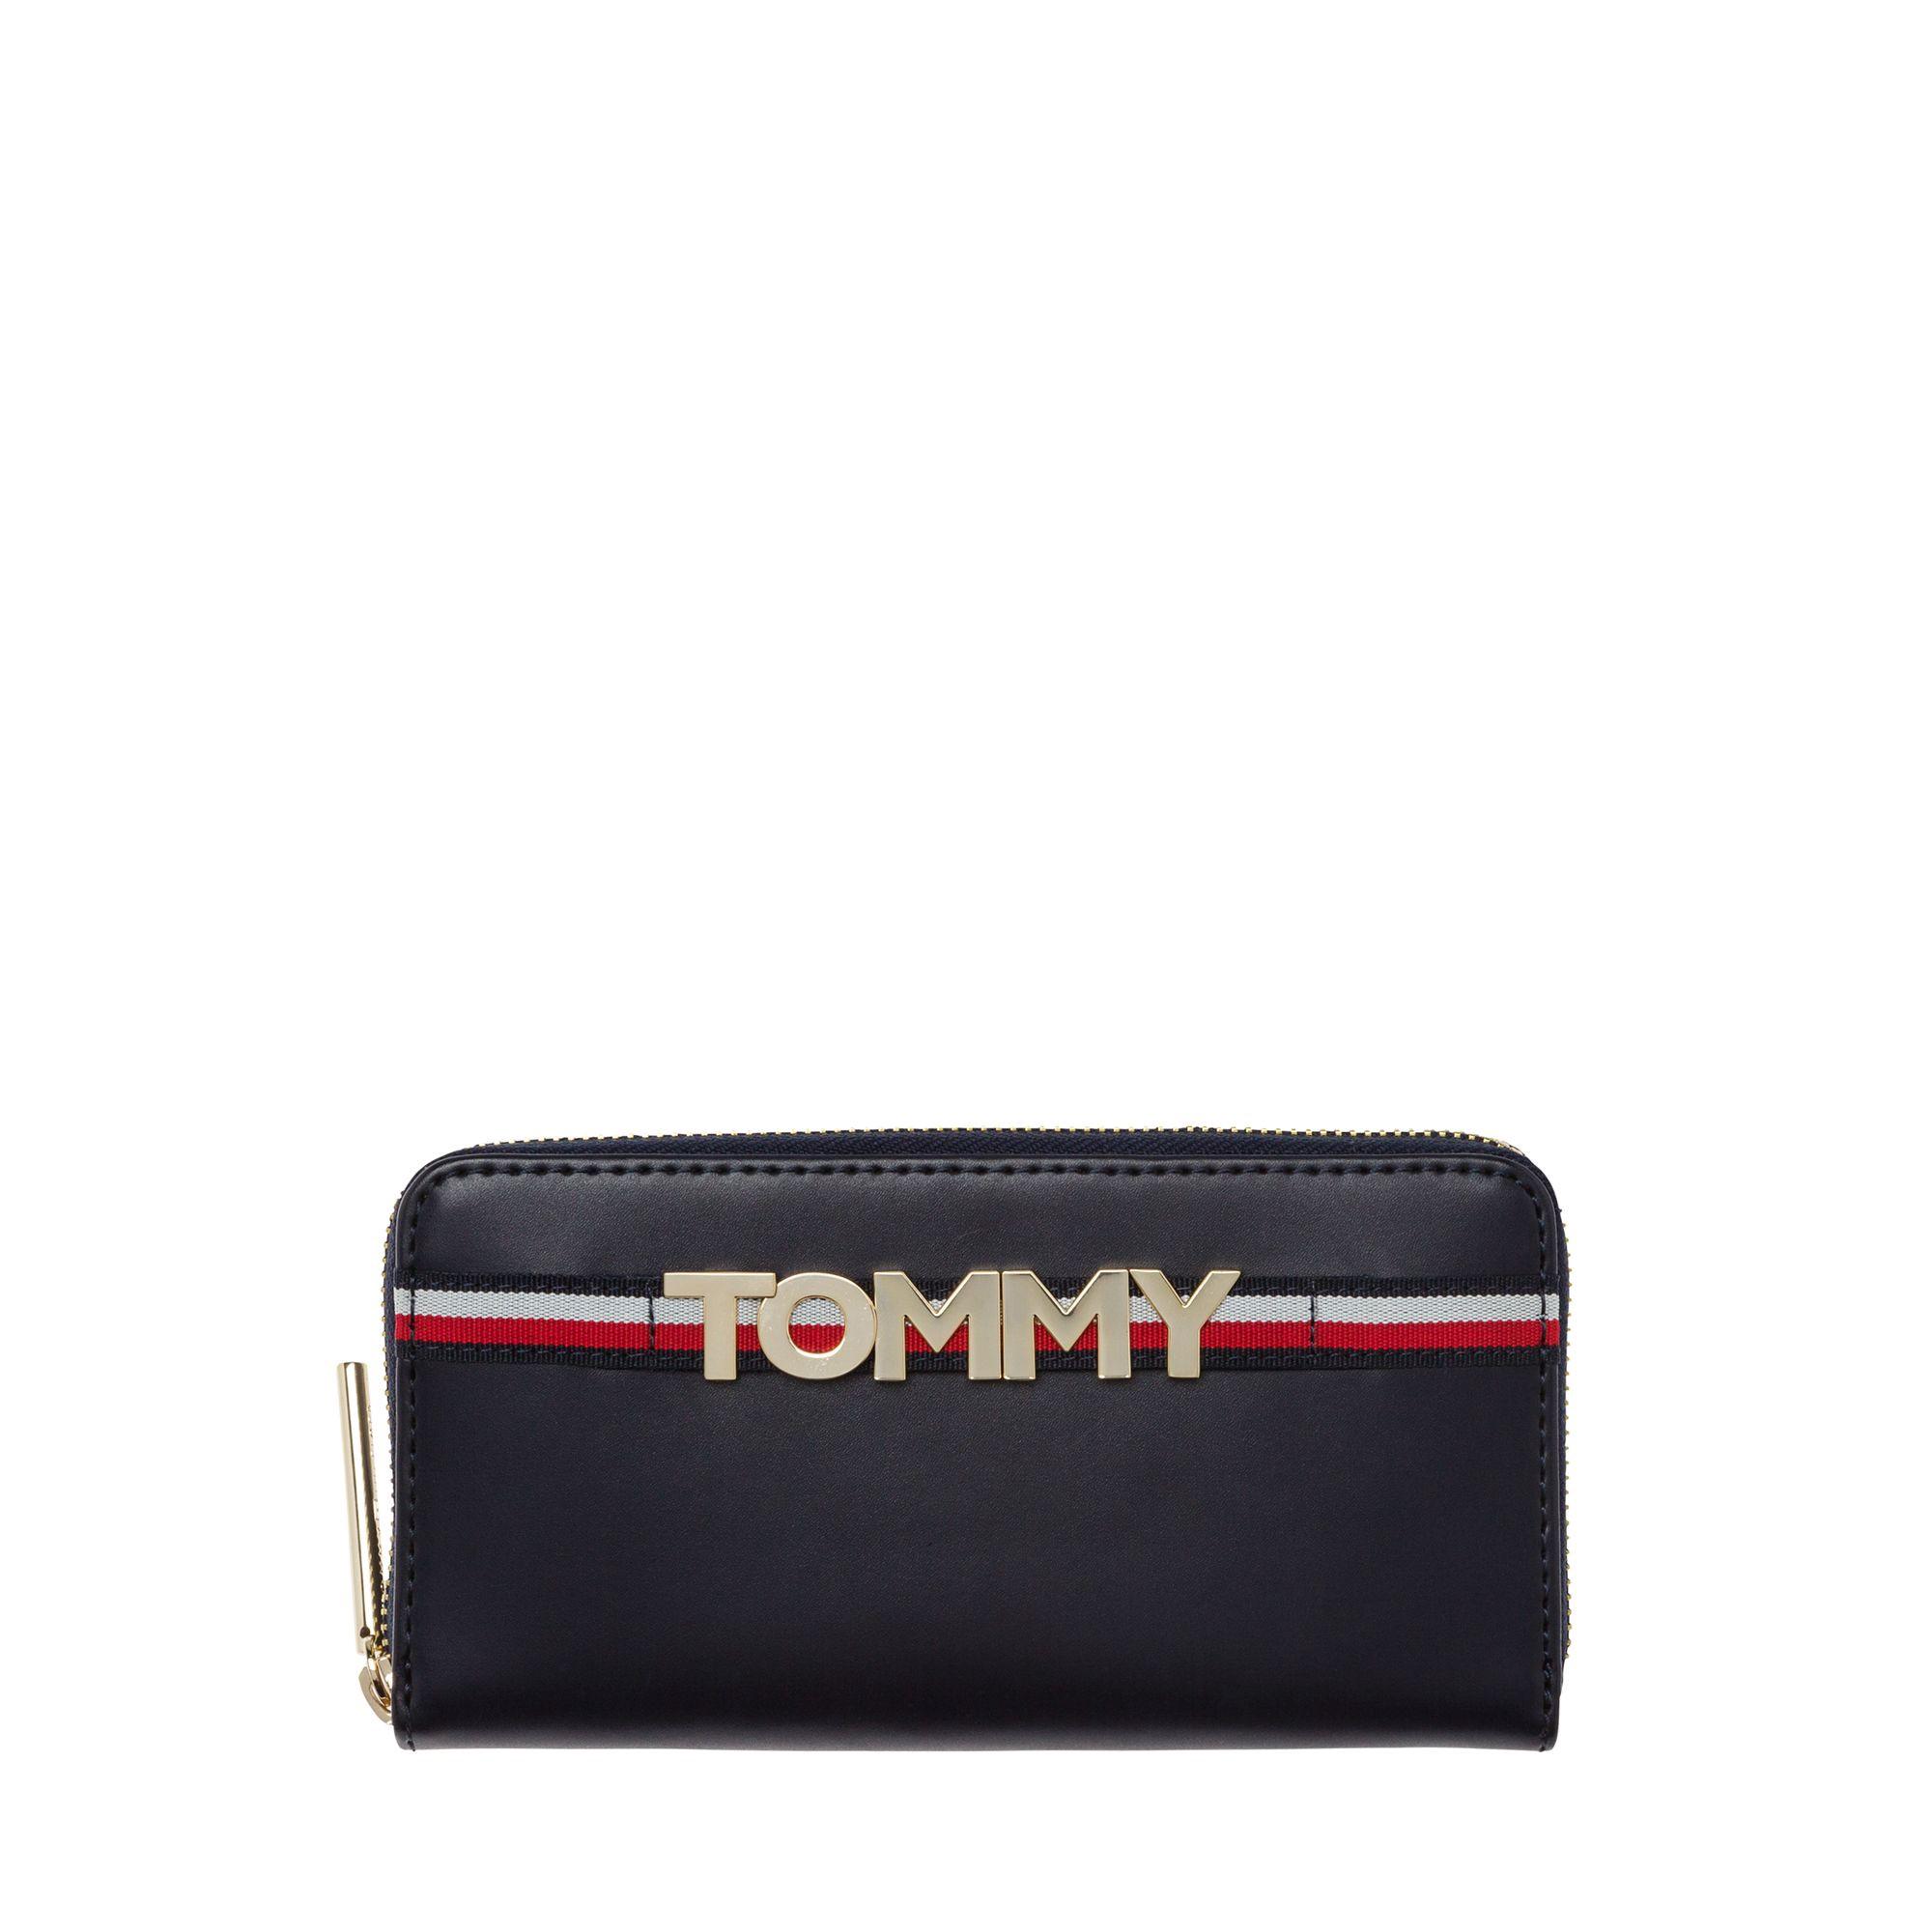 tommy long wallet